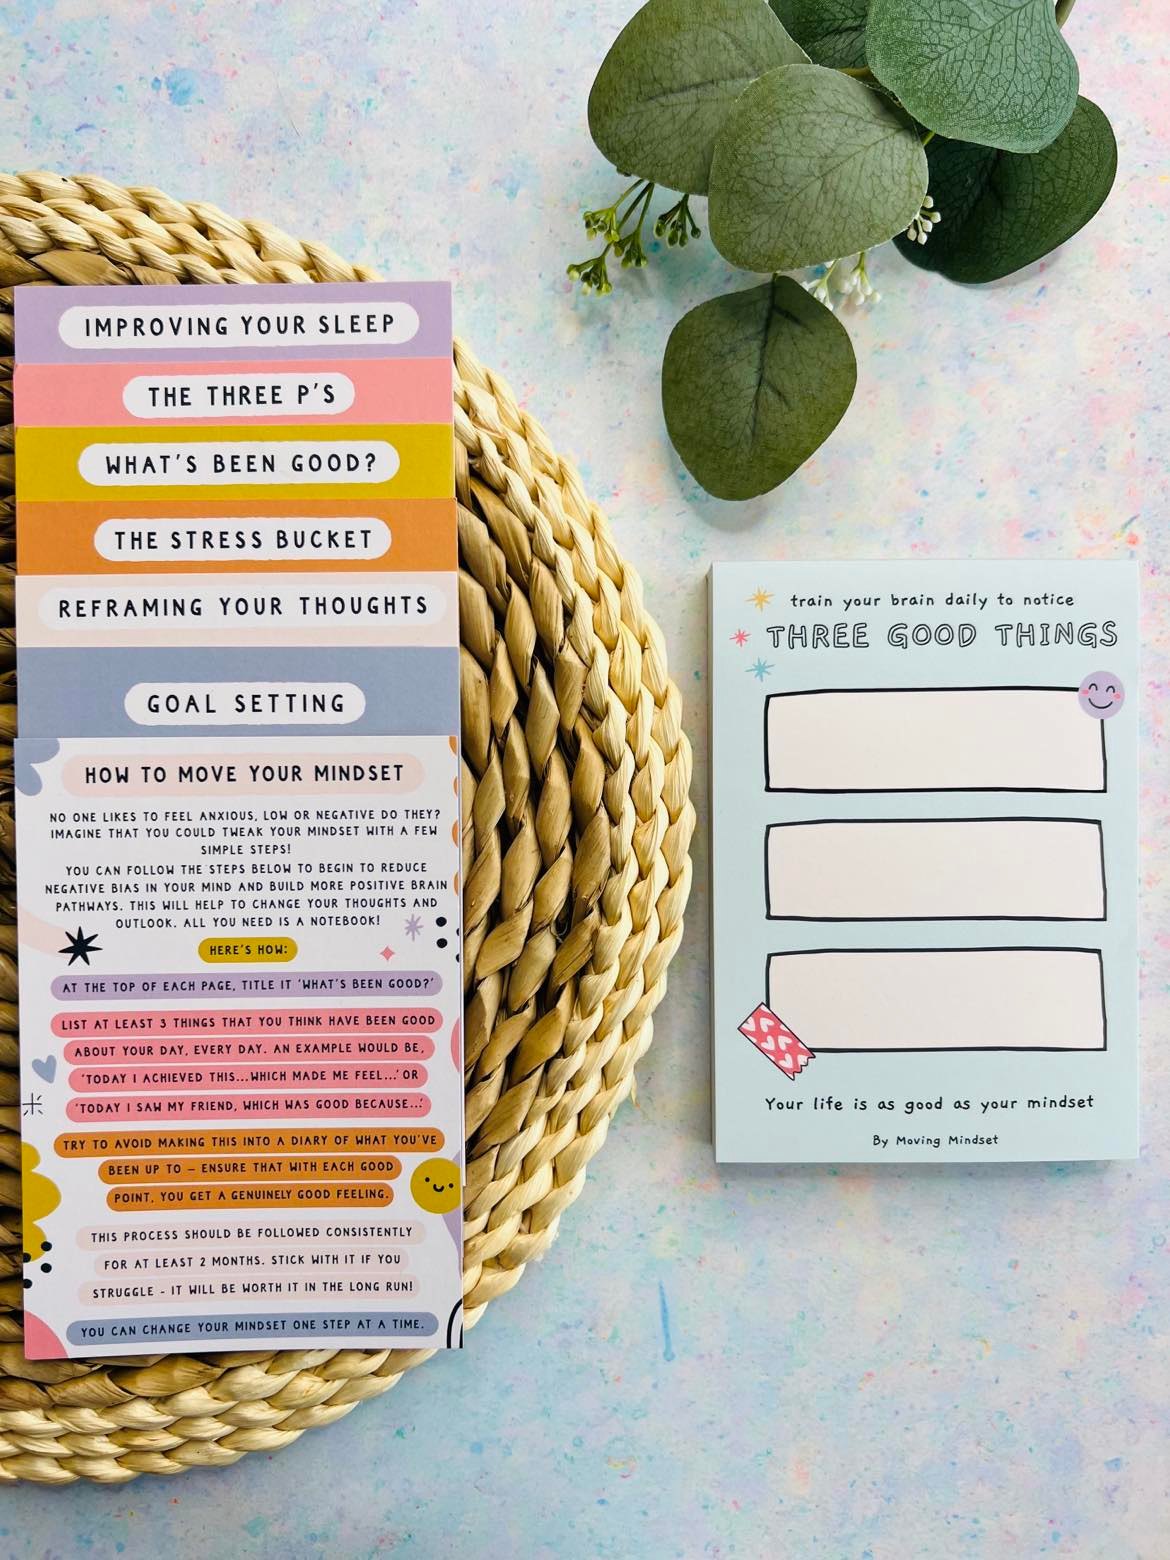 Gratitude - Three Good Things Notepad